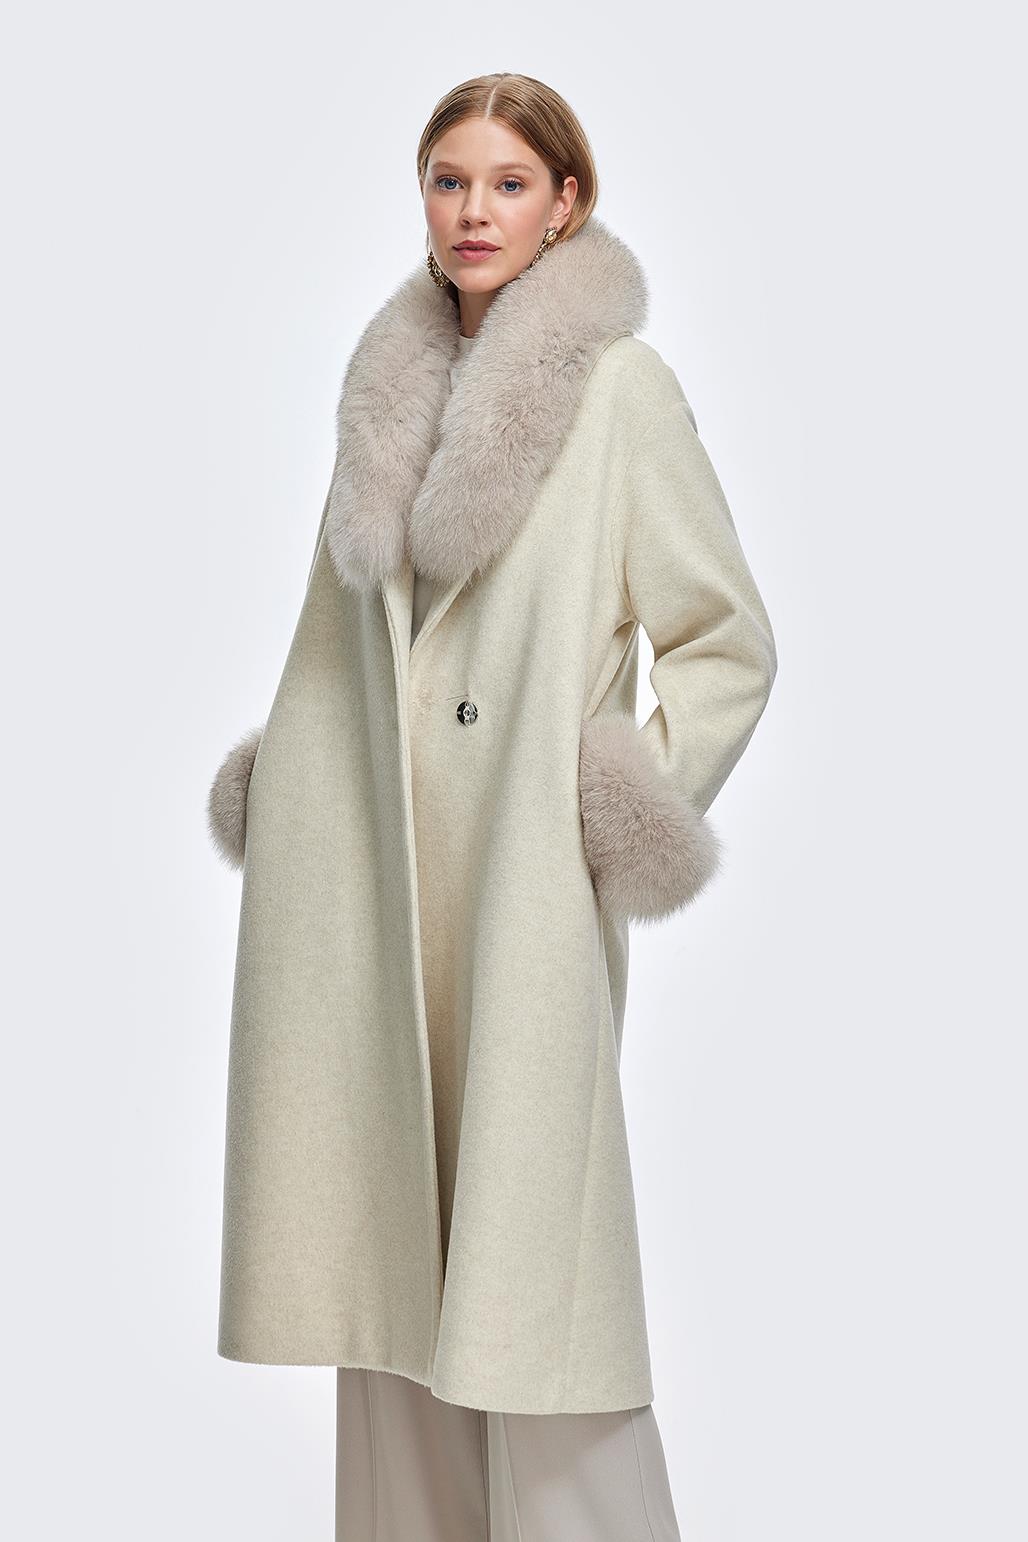 Shawl Collar Faux Cashmere Fur Coat Beige